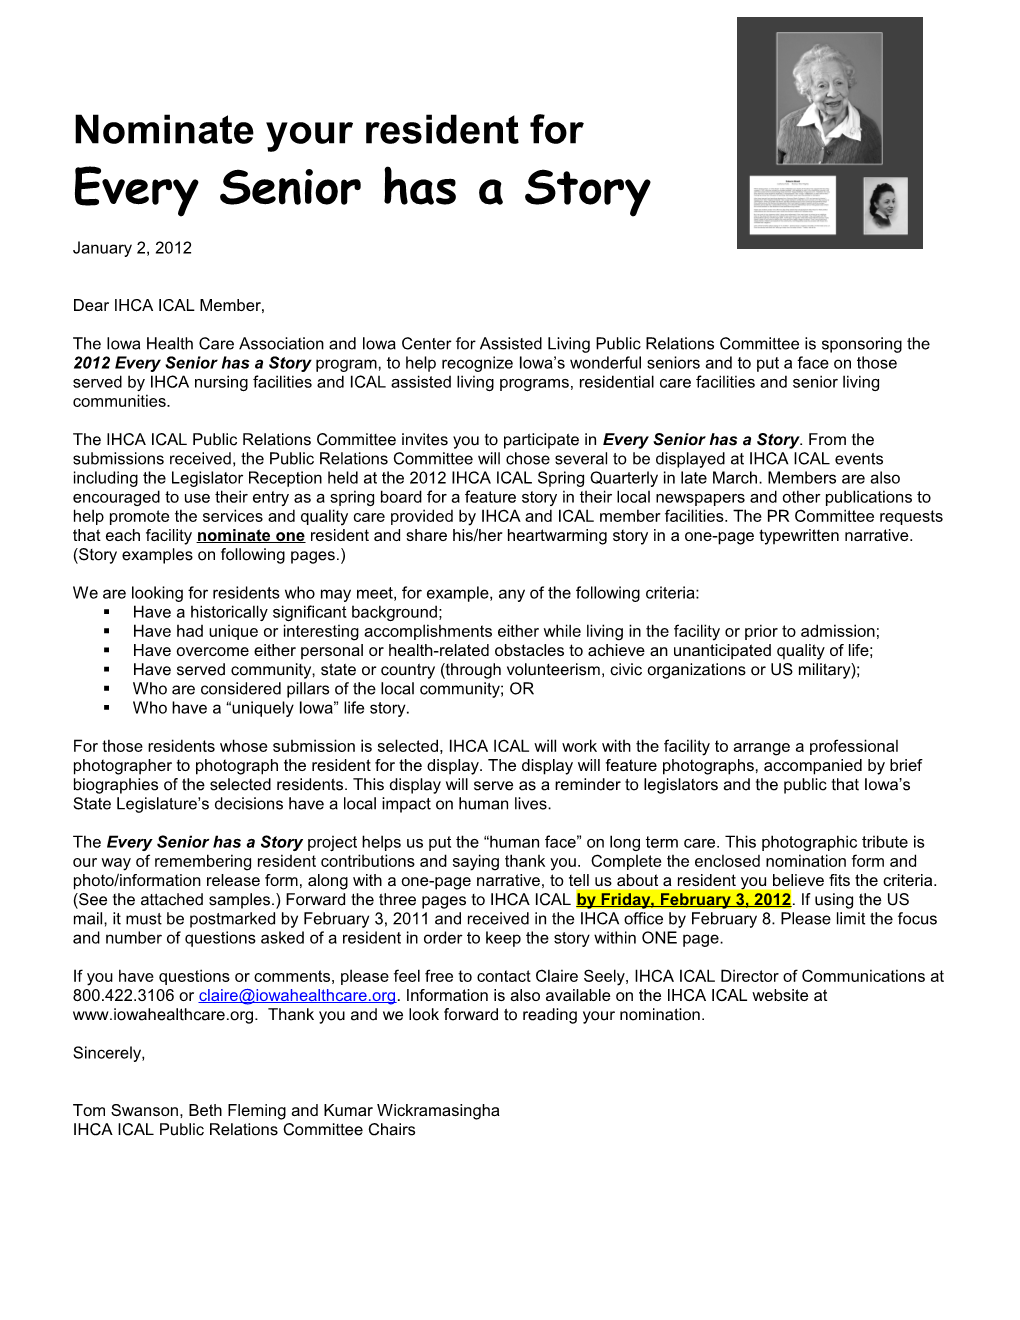 Every Senior Has a Story